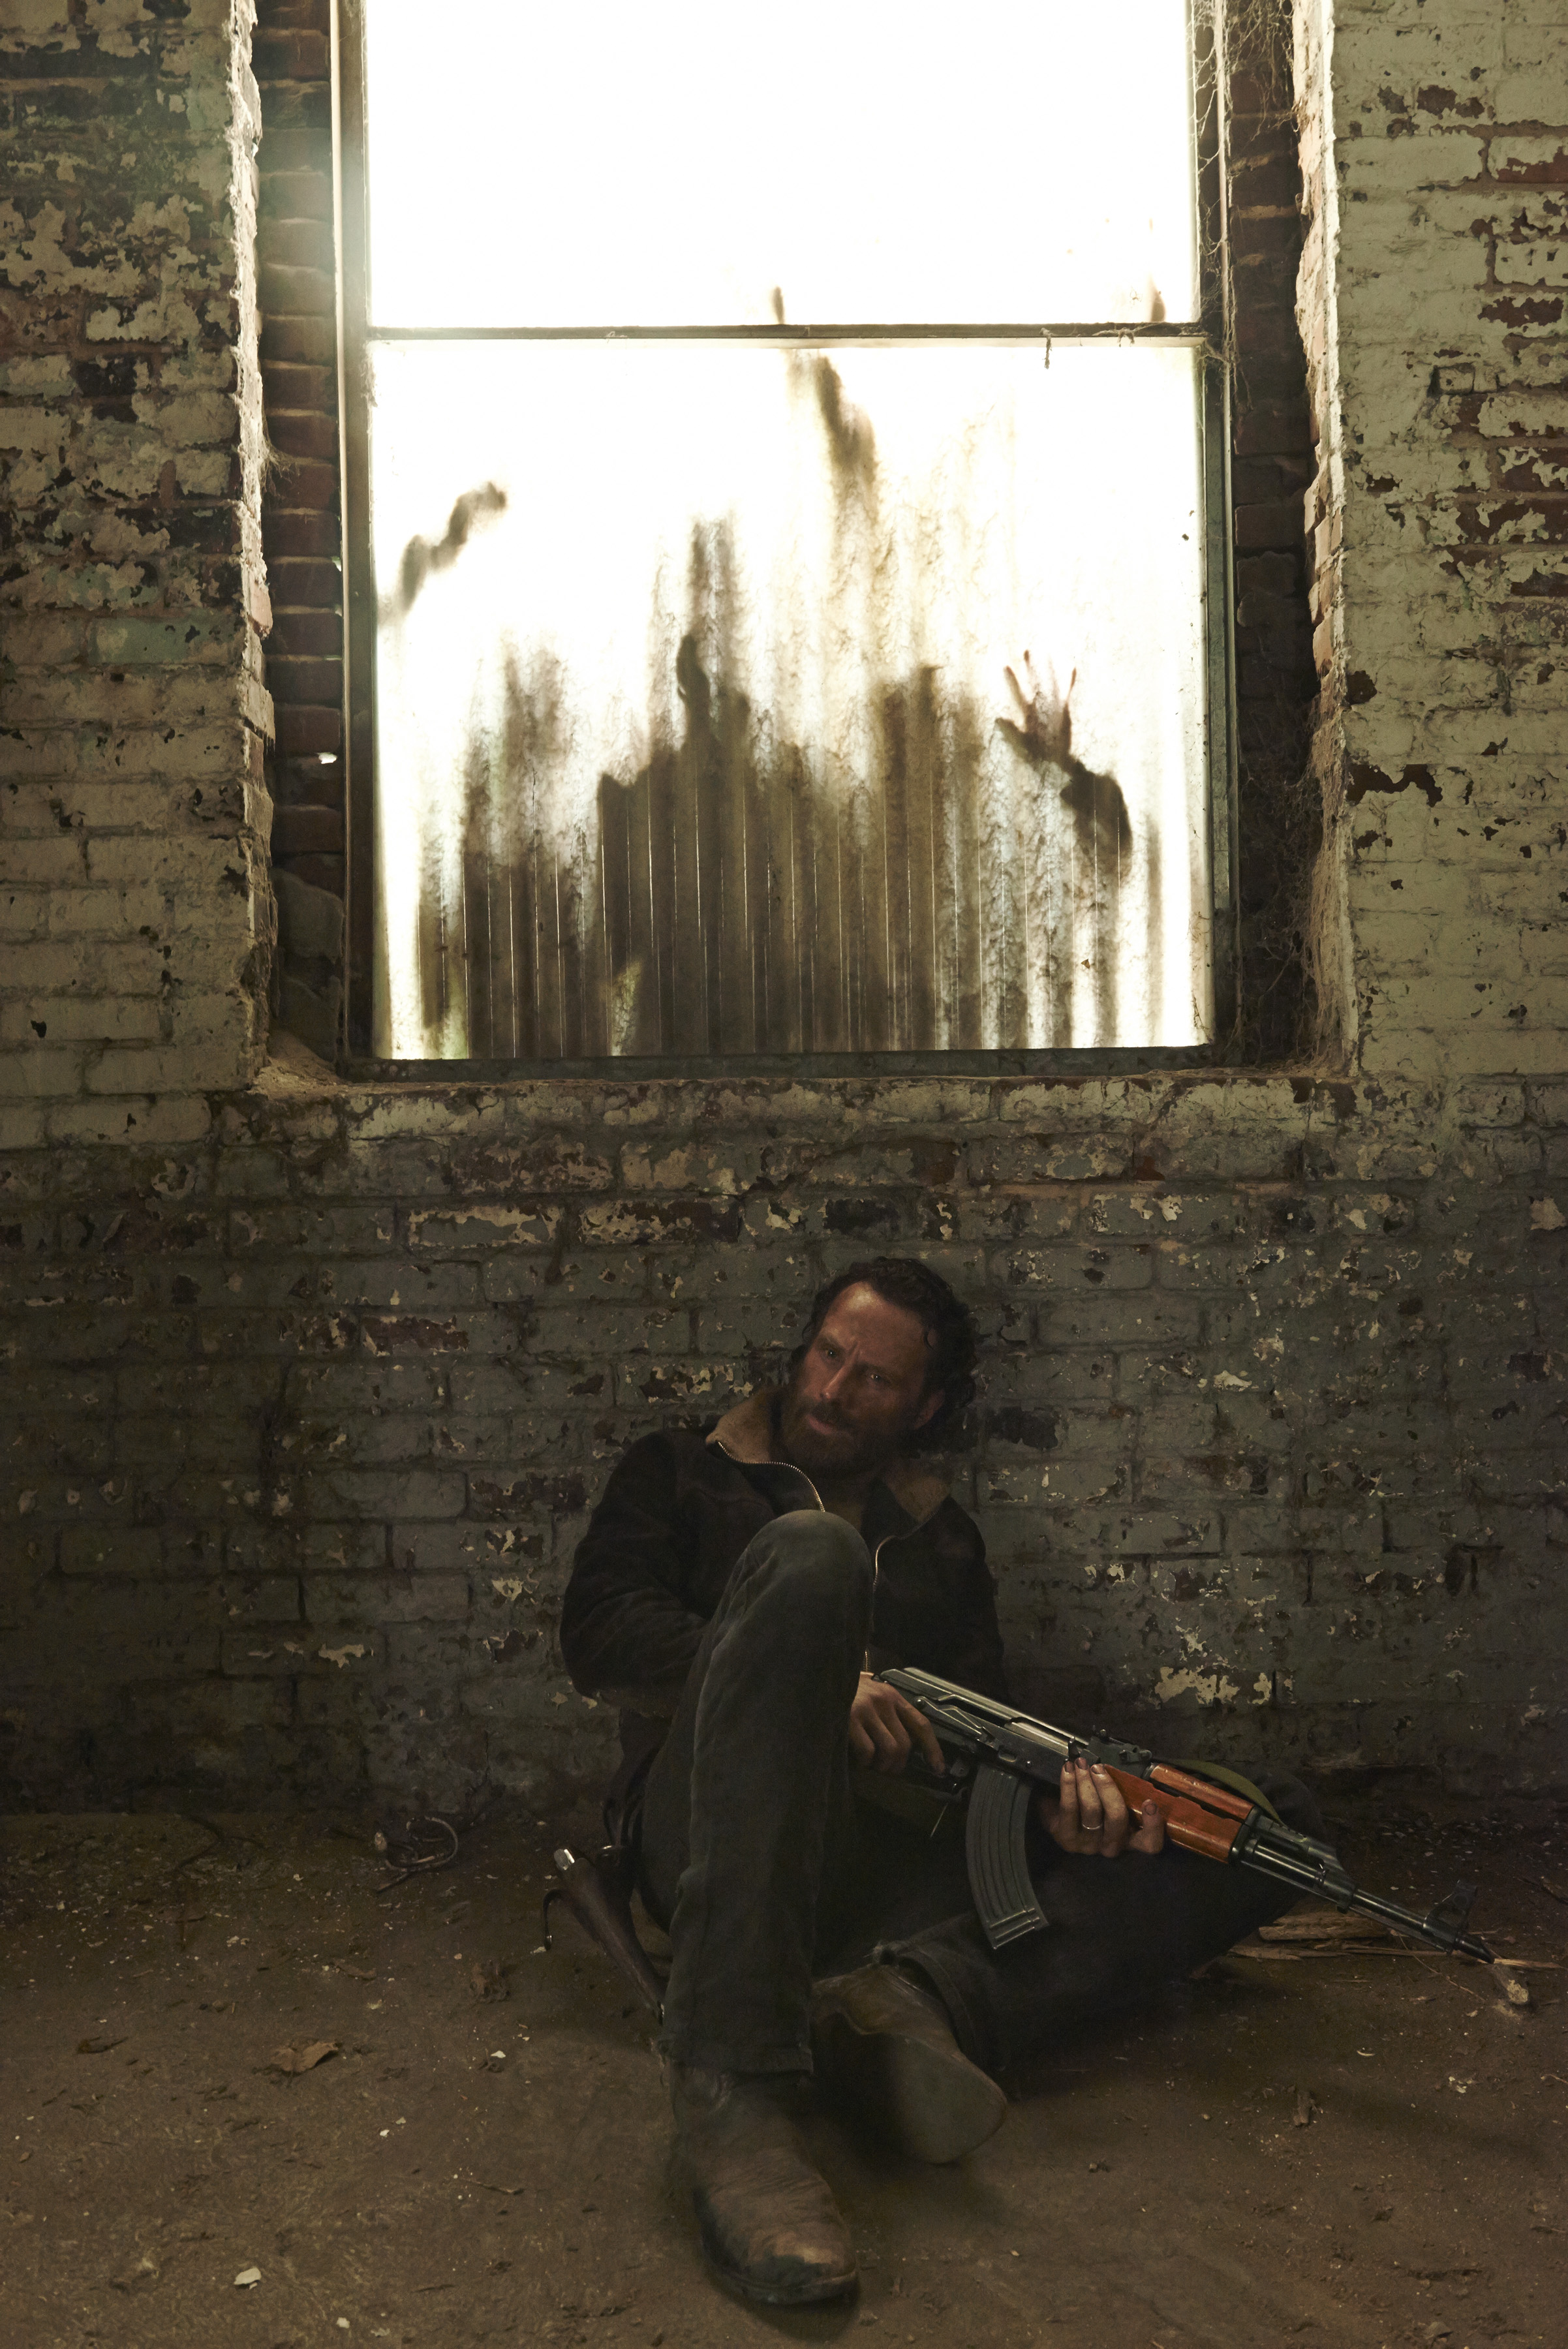 Andrew Lincoln as Rick Grimes - The Walking Dead _ Season 5, Gallery - Photo Credit: Frank Ockenfels 3/AMC